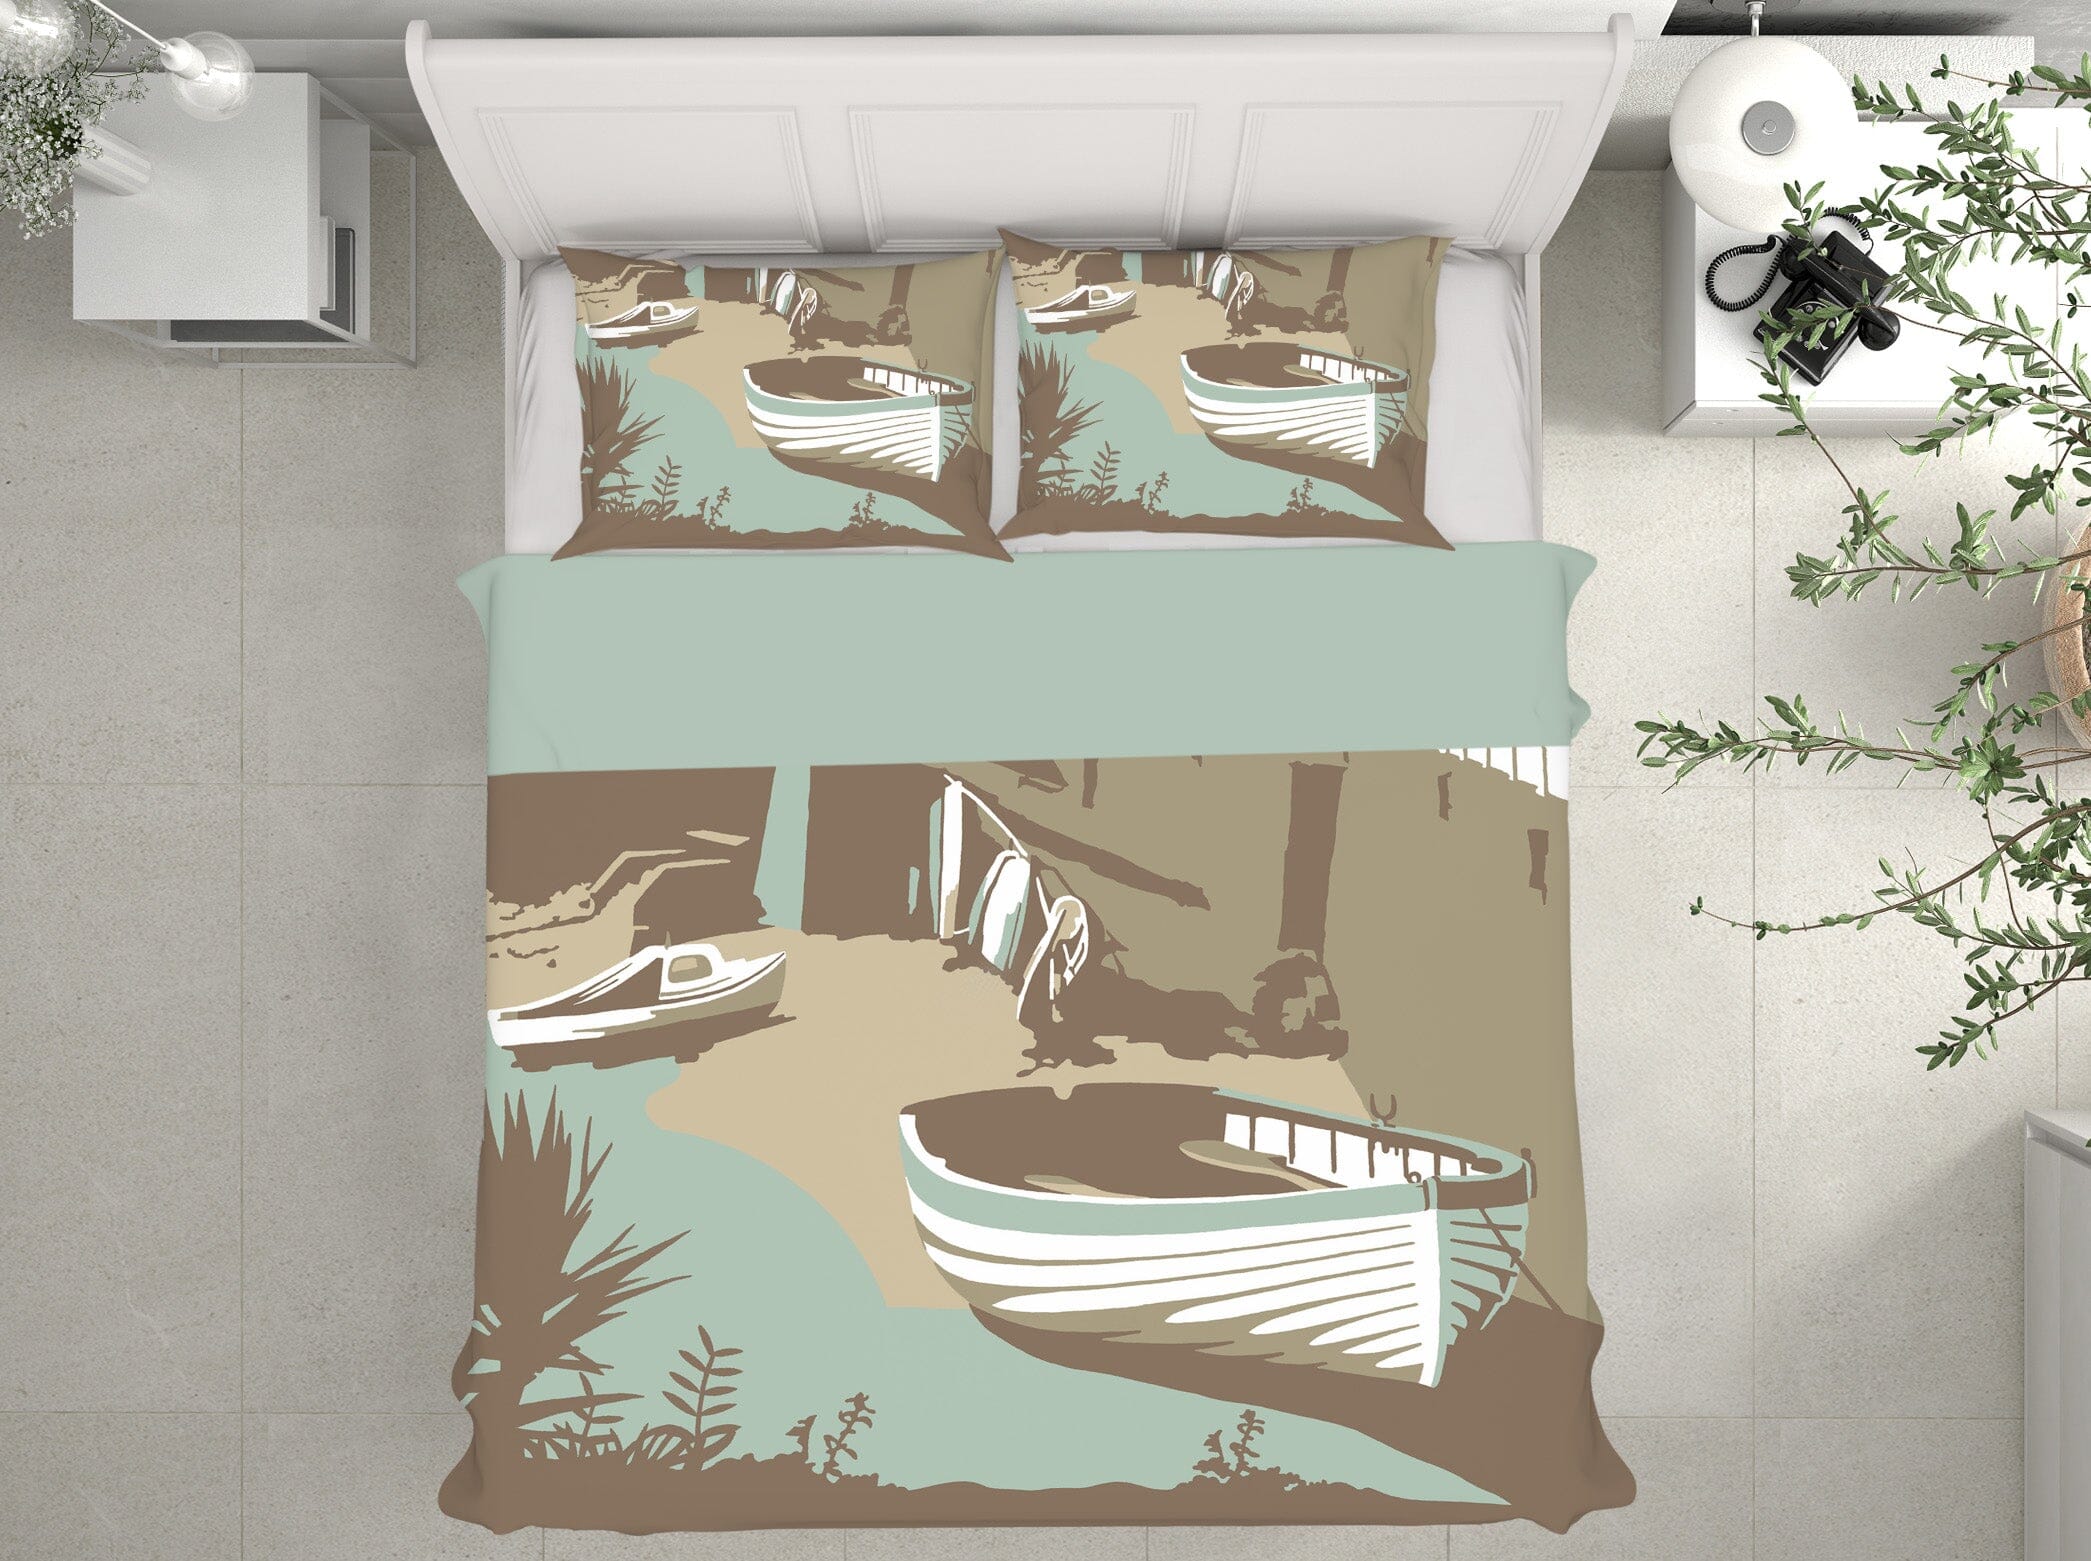 3D Mousehole 2028 Steve Read Bedding Bed Pillowcases Quilt Quiet Covers AJ Creativity Home 